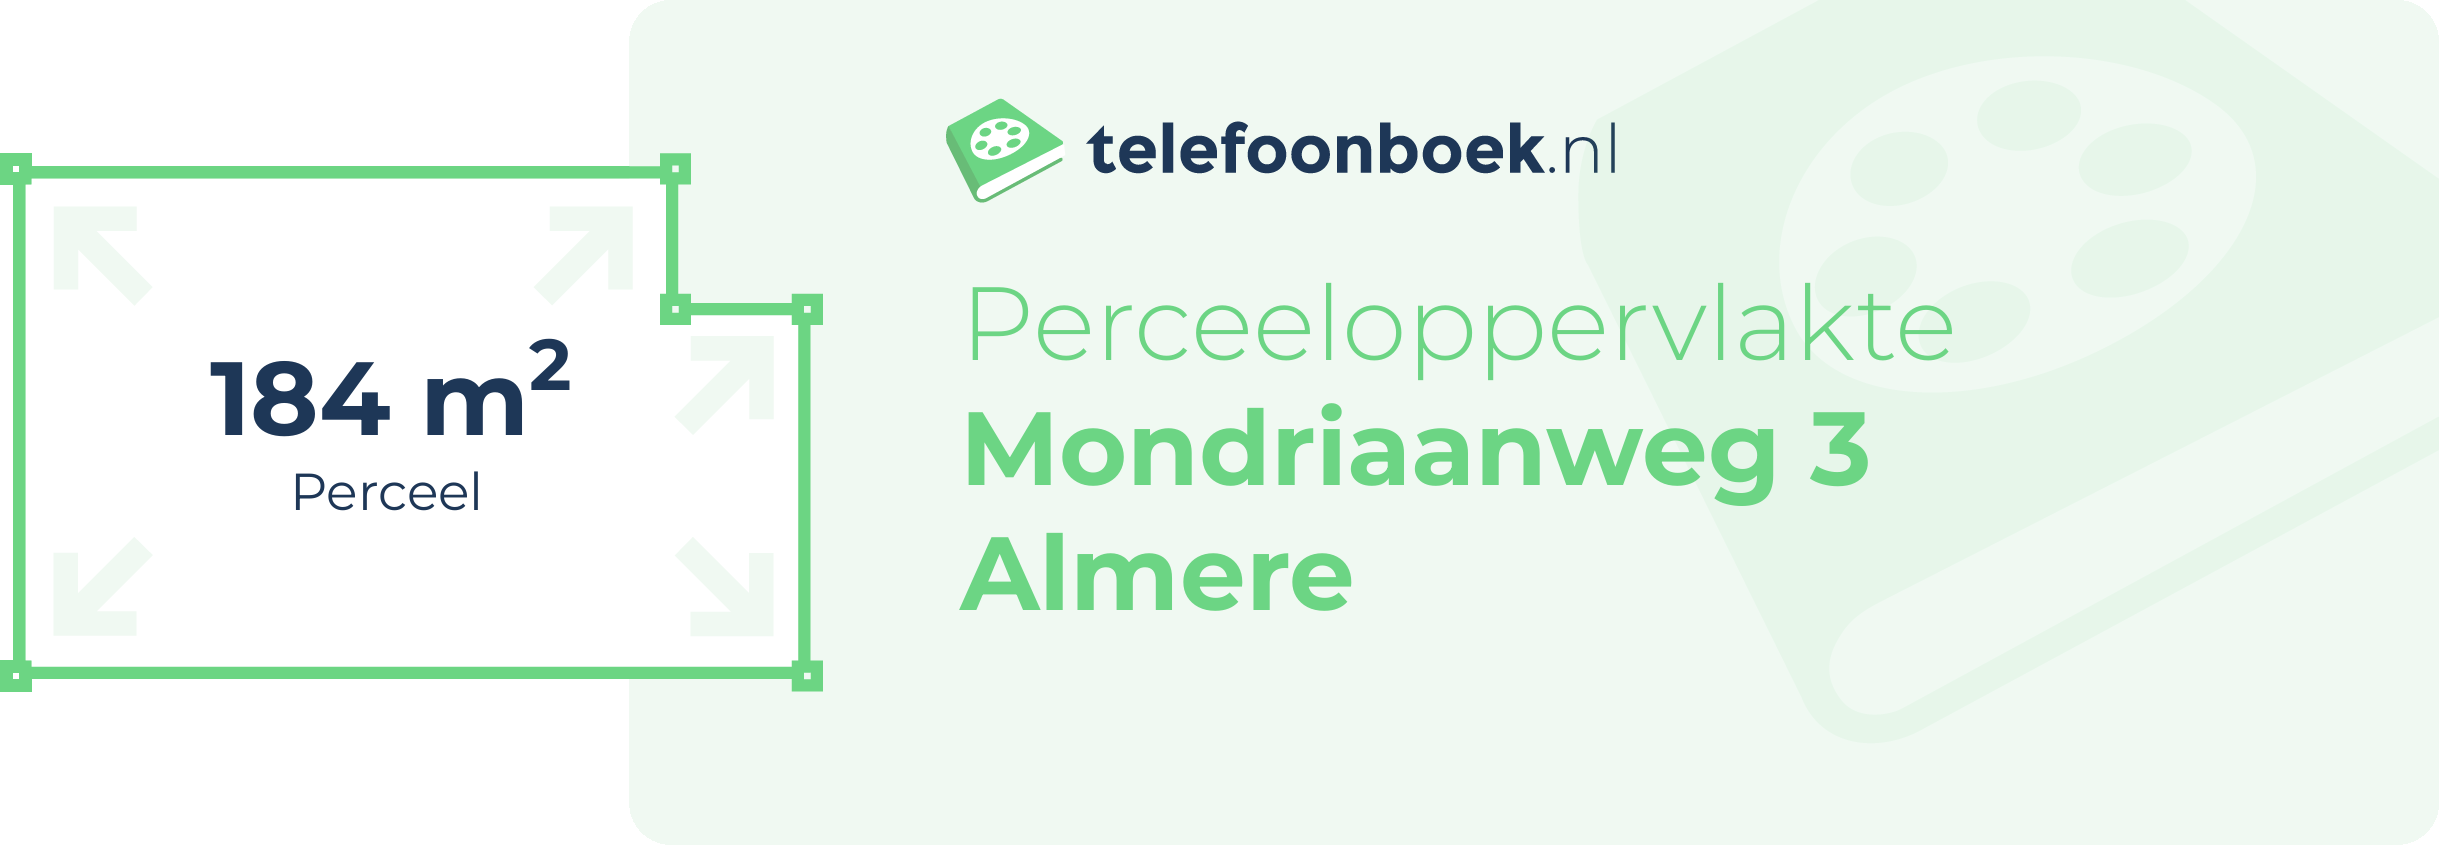 Perceeloppervlakte Mondriaanweg 3 Almere